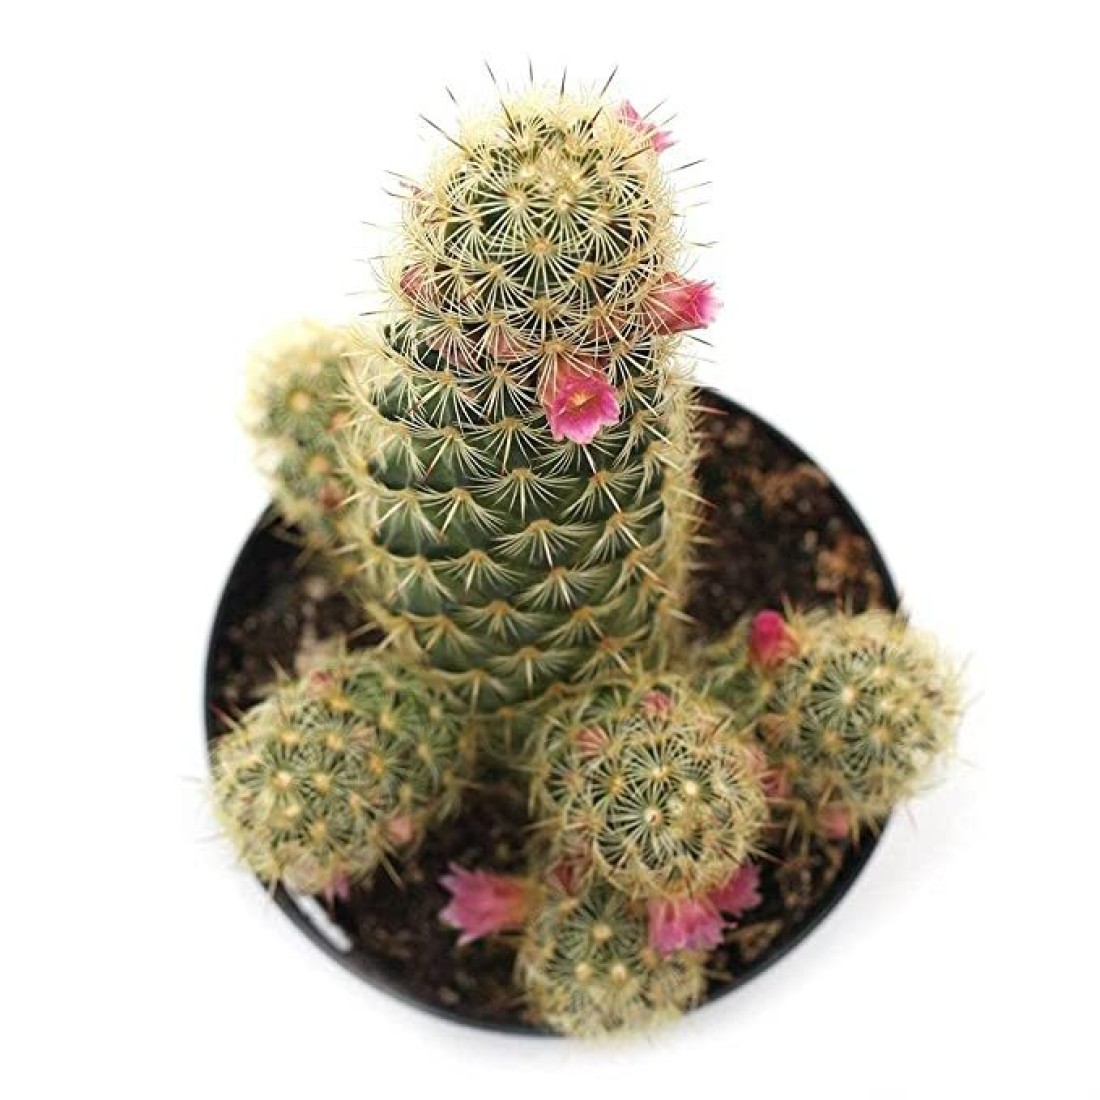 Mammillaria ELONGATA (Lady fingers) cactus plant